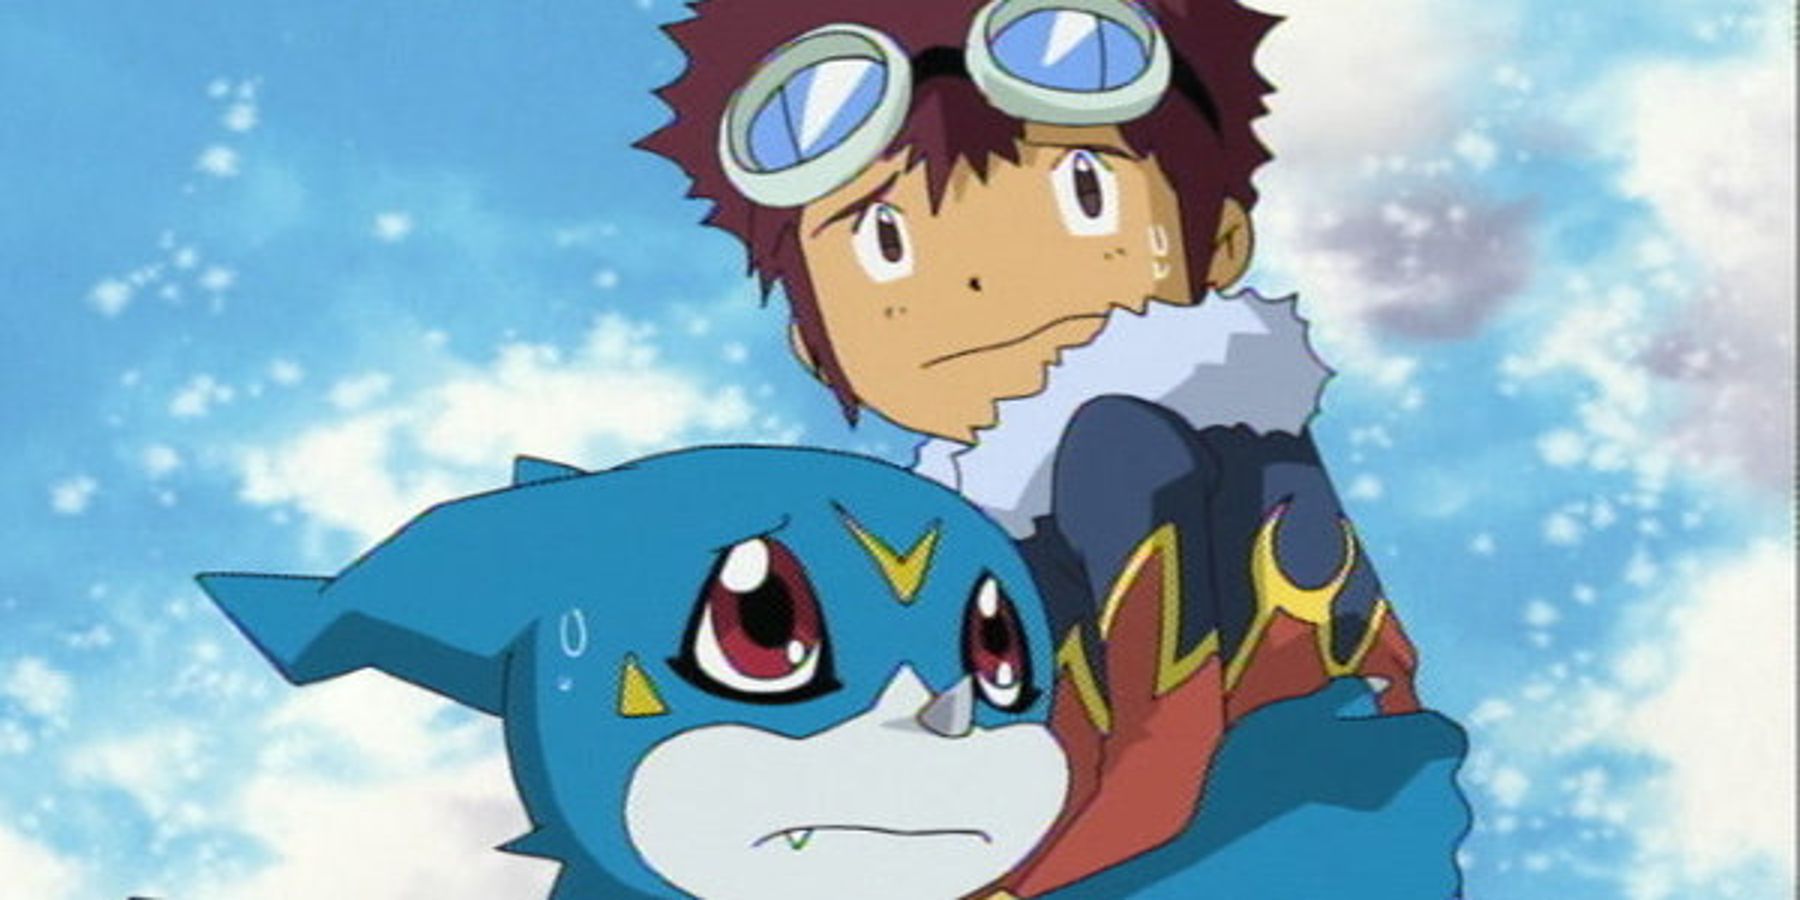 Davis and Veemon from Digimon Adventure 02 anime series